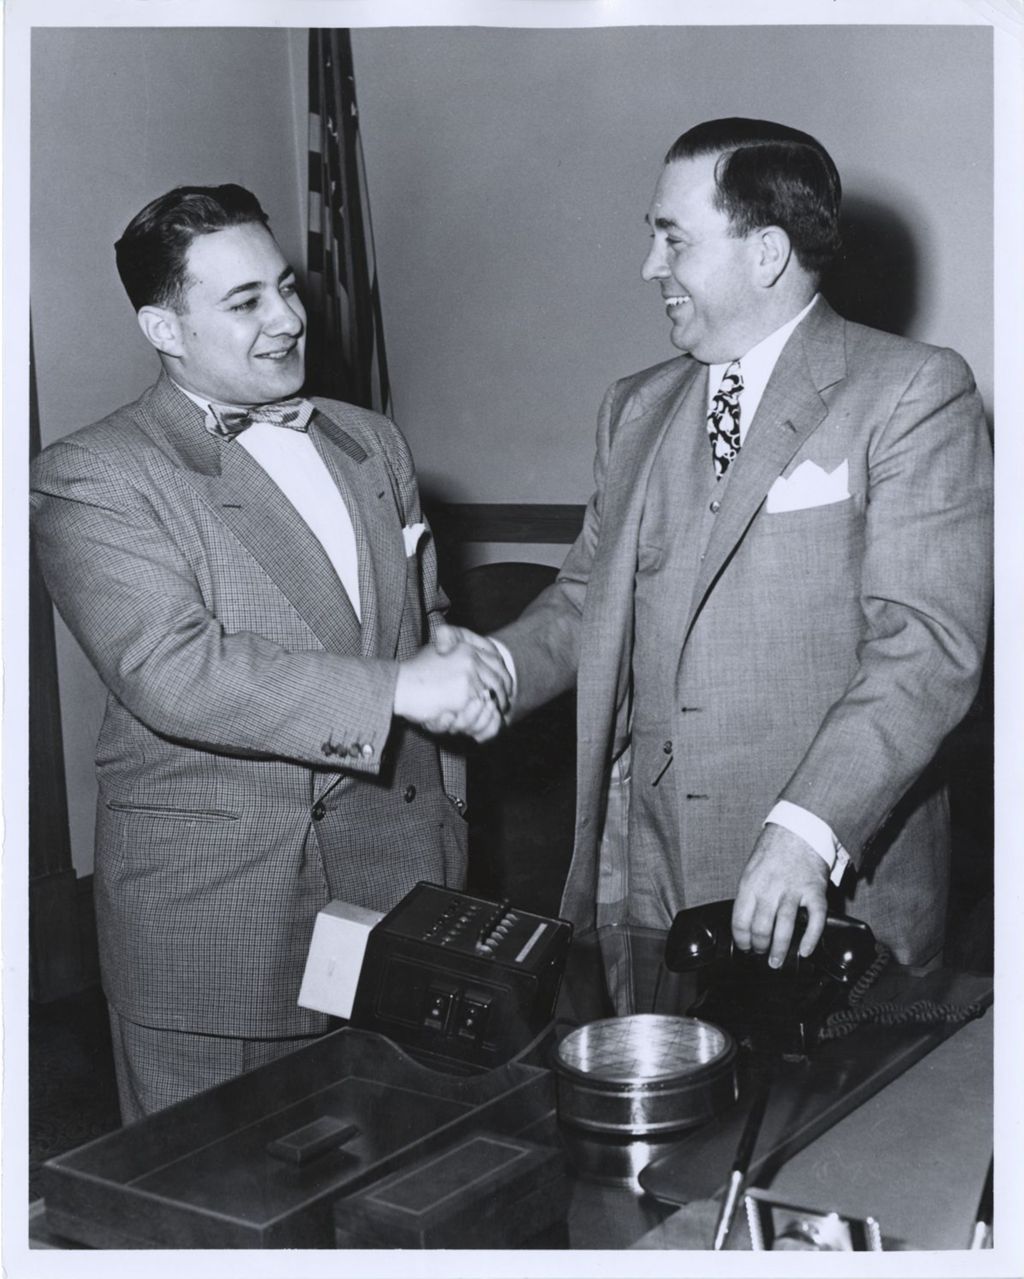 Miniature of Frank Barbaro and Richard J. Daley shaking hands